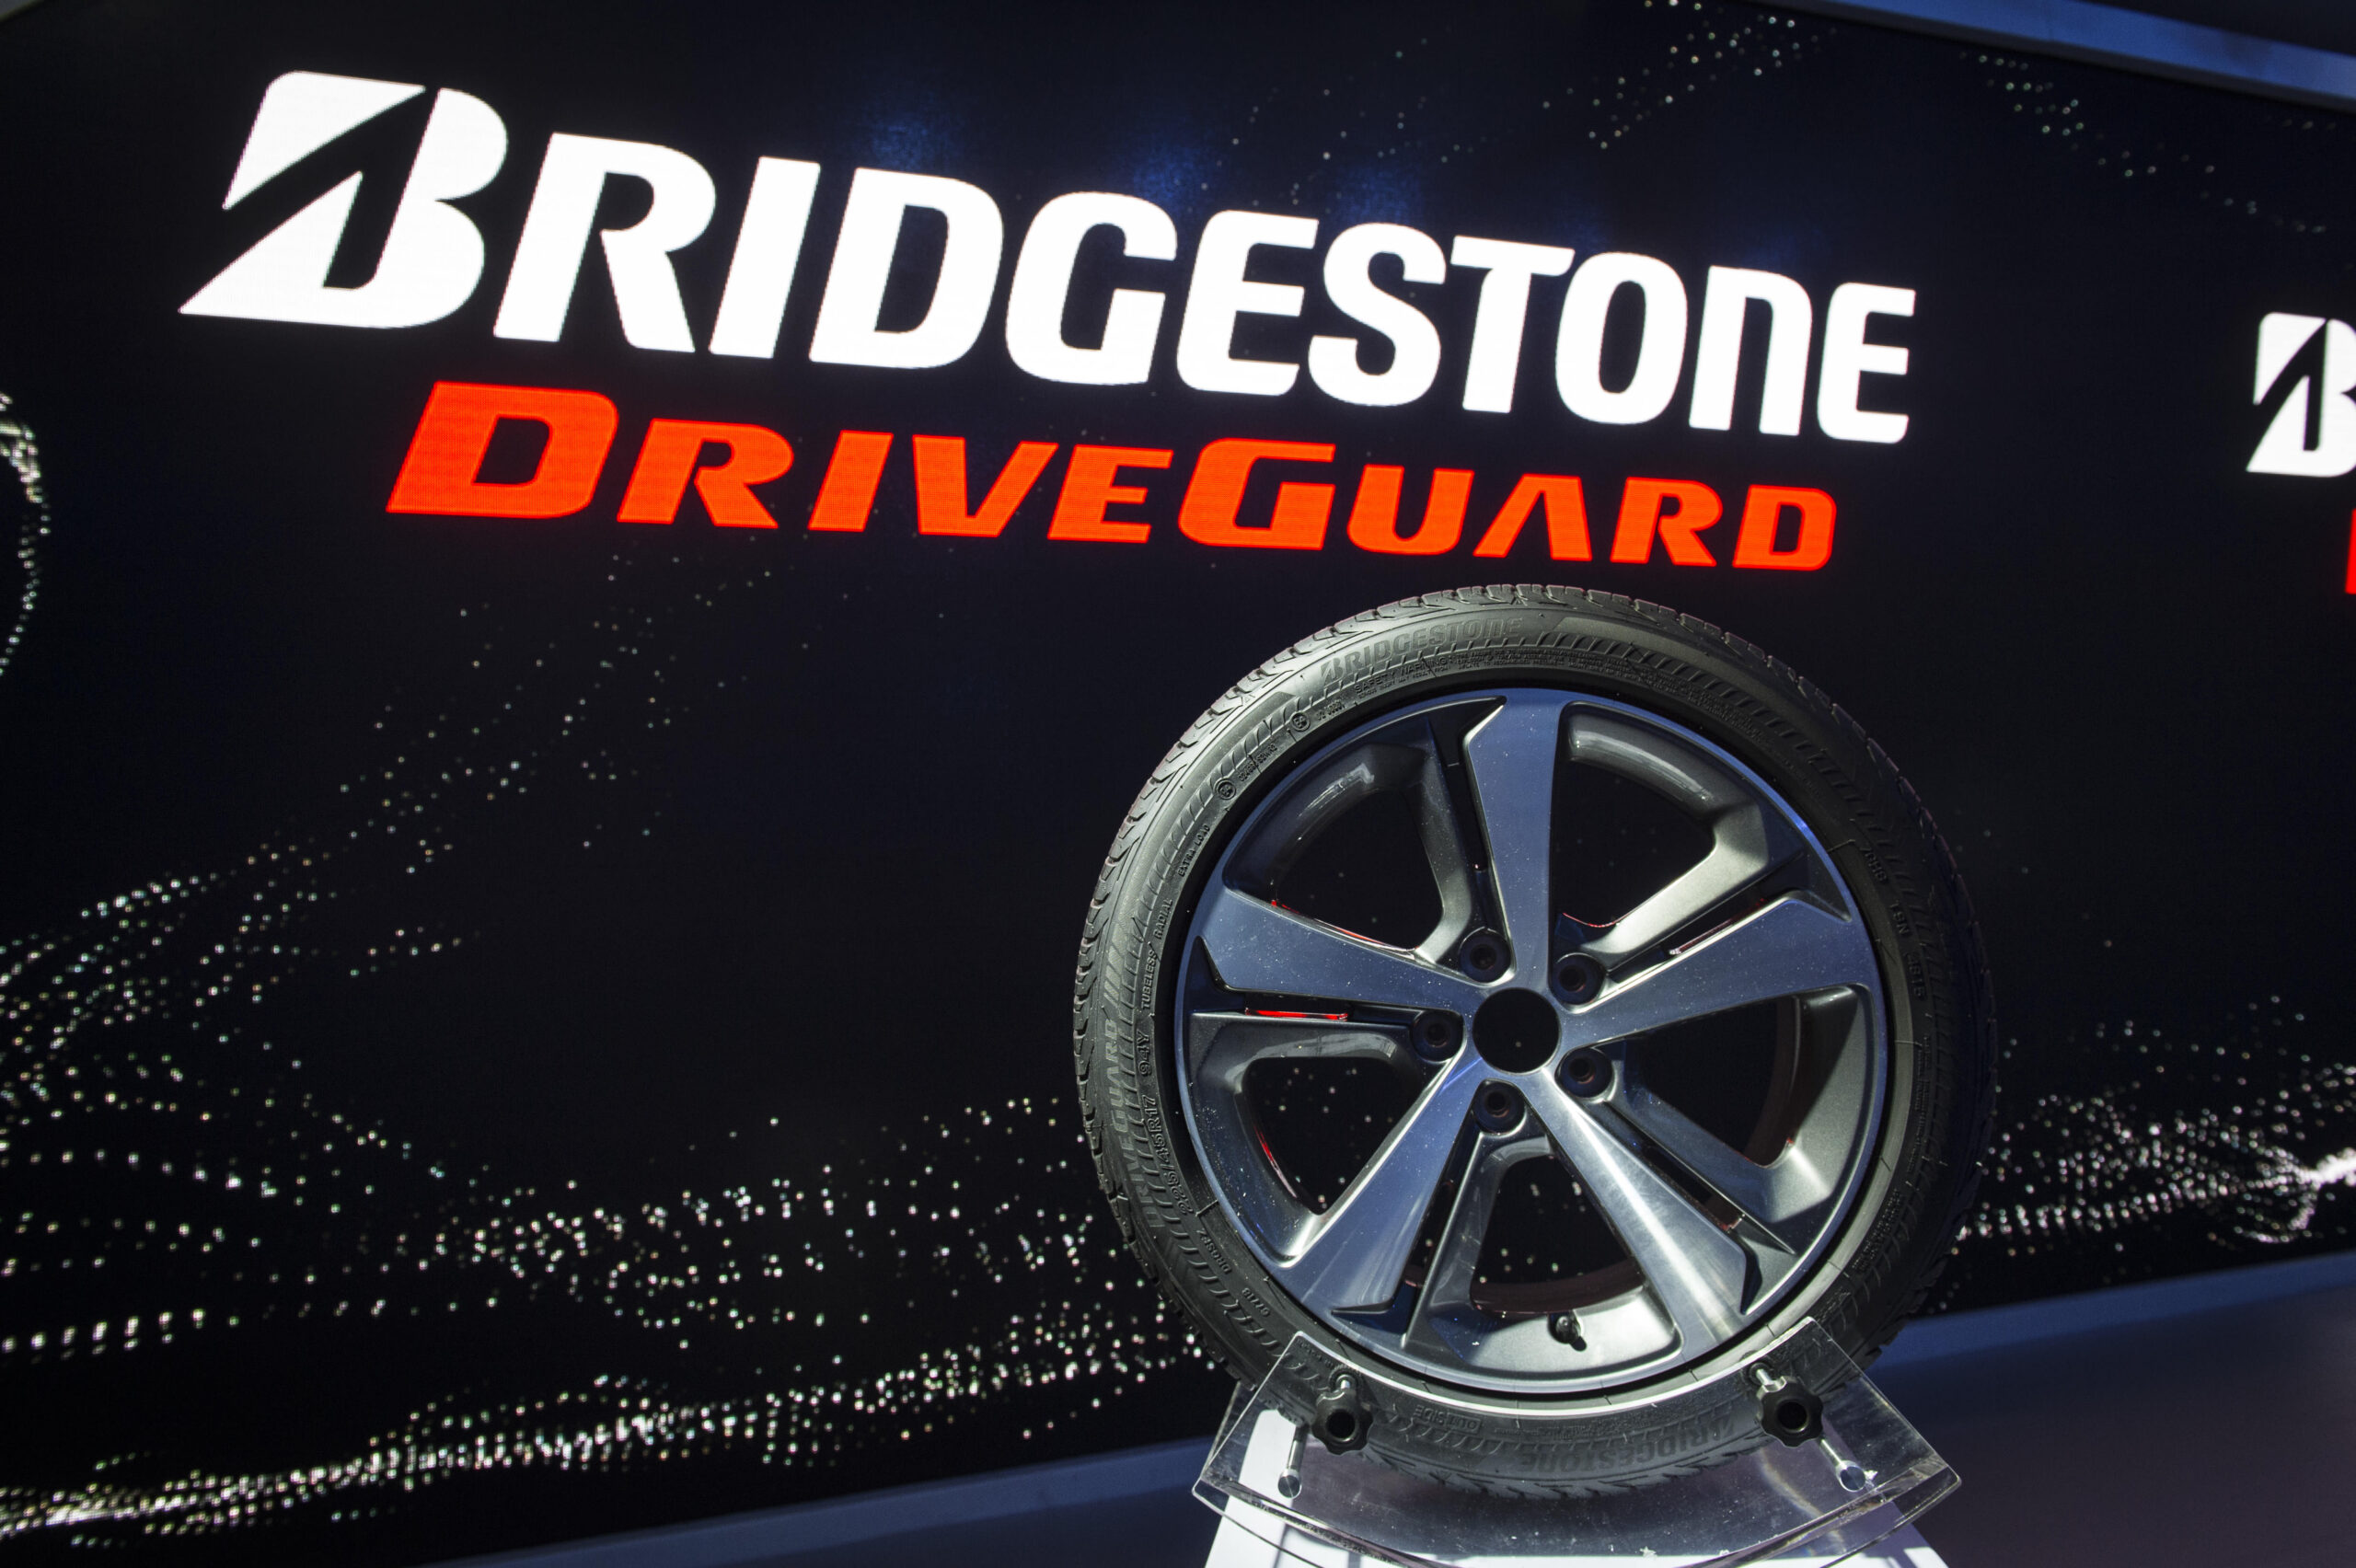 Bridgestone DriveGuard